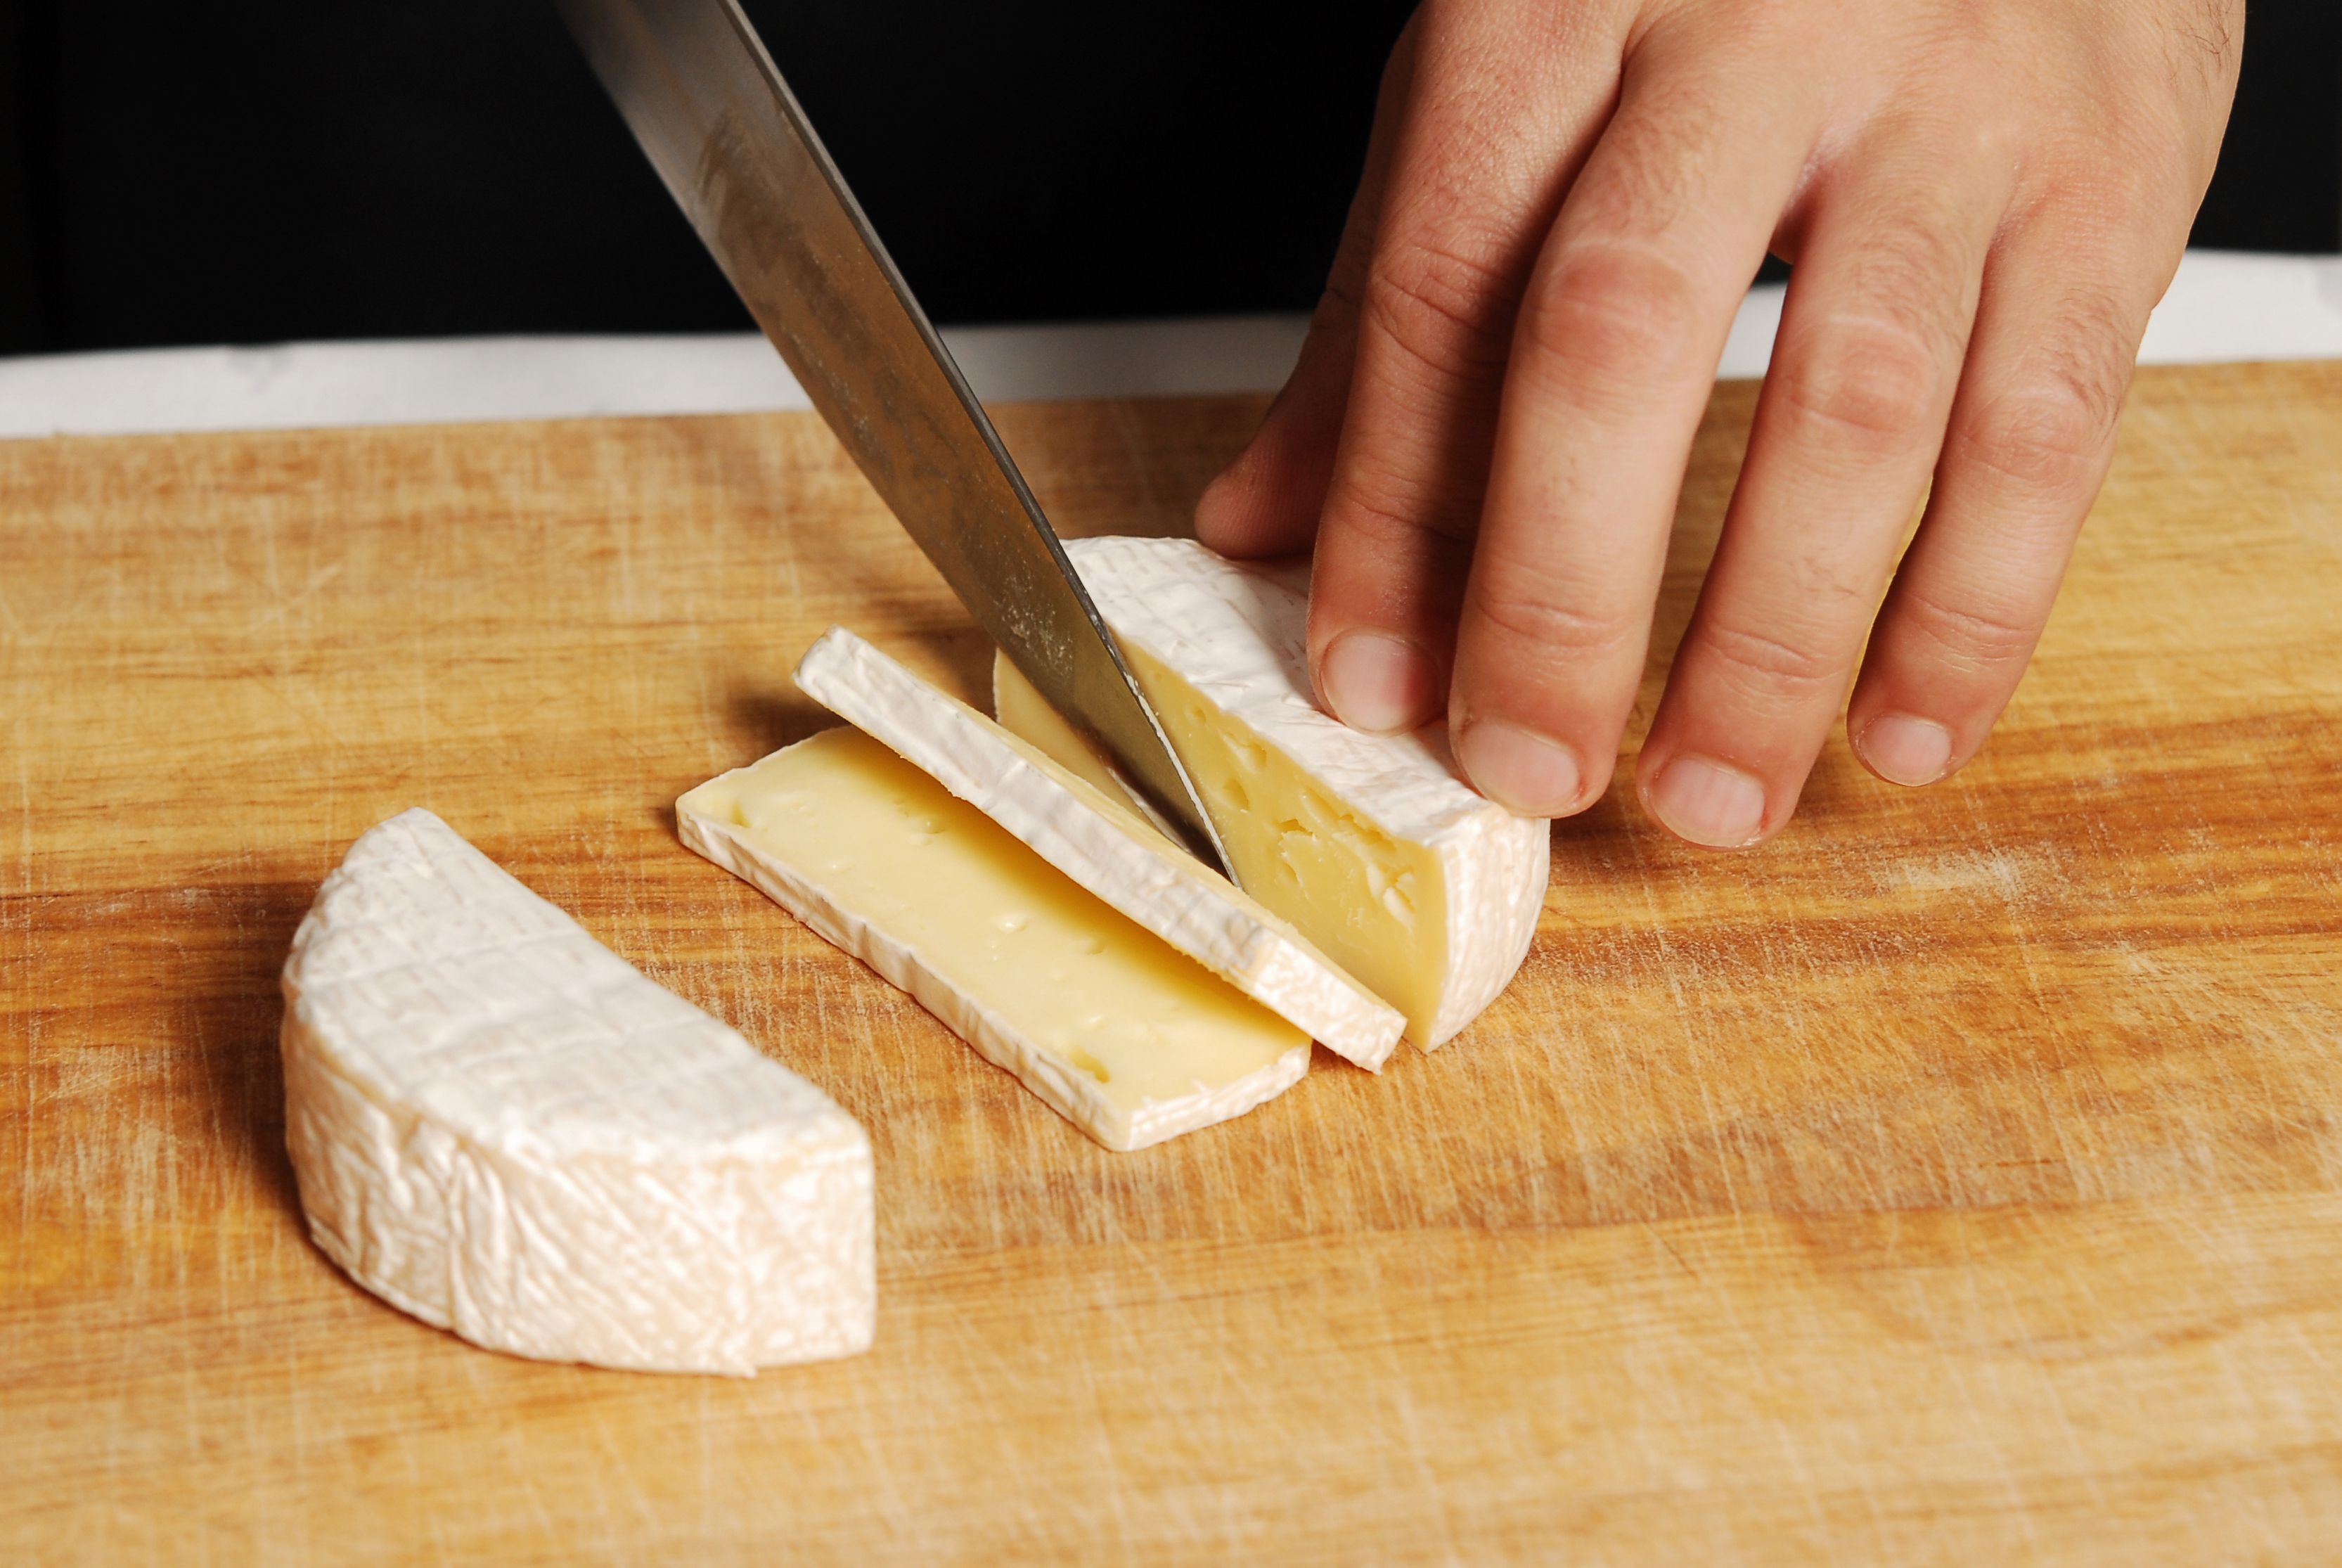 Las Vegas Raiders Brie Cheese Cutting Board & Tools Set